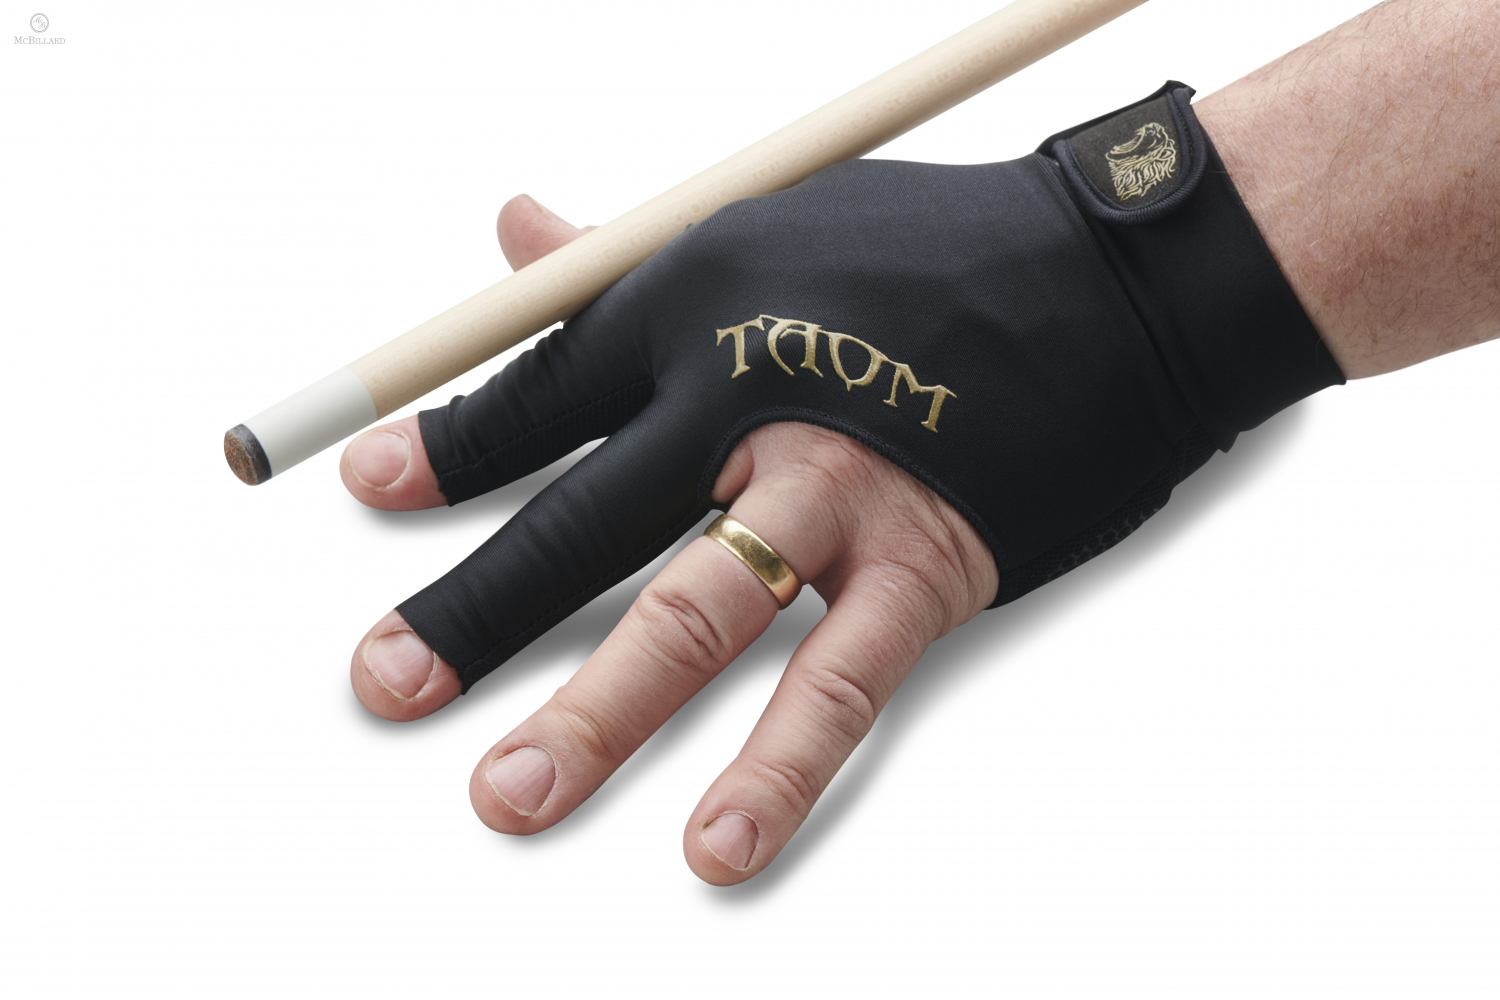 Billiard Glove TAOM - 3-finger - For right hand - Size XL